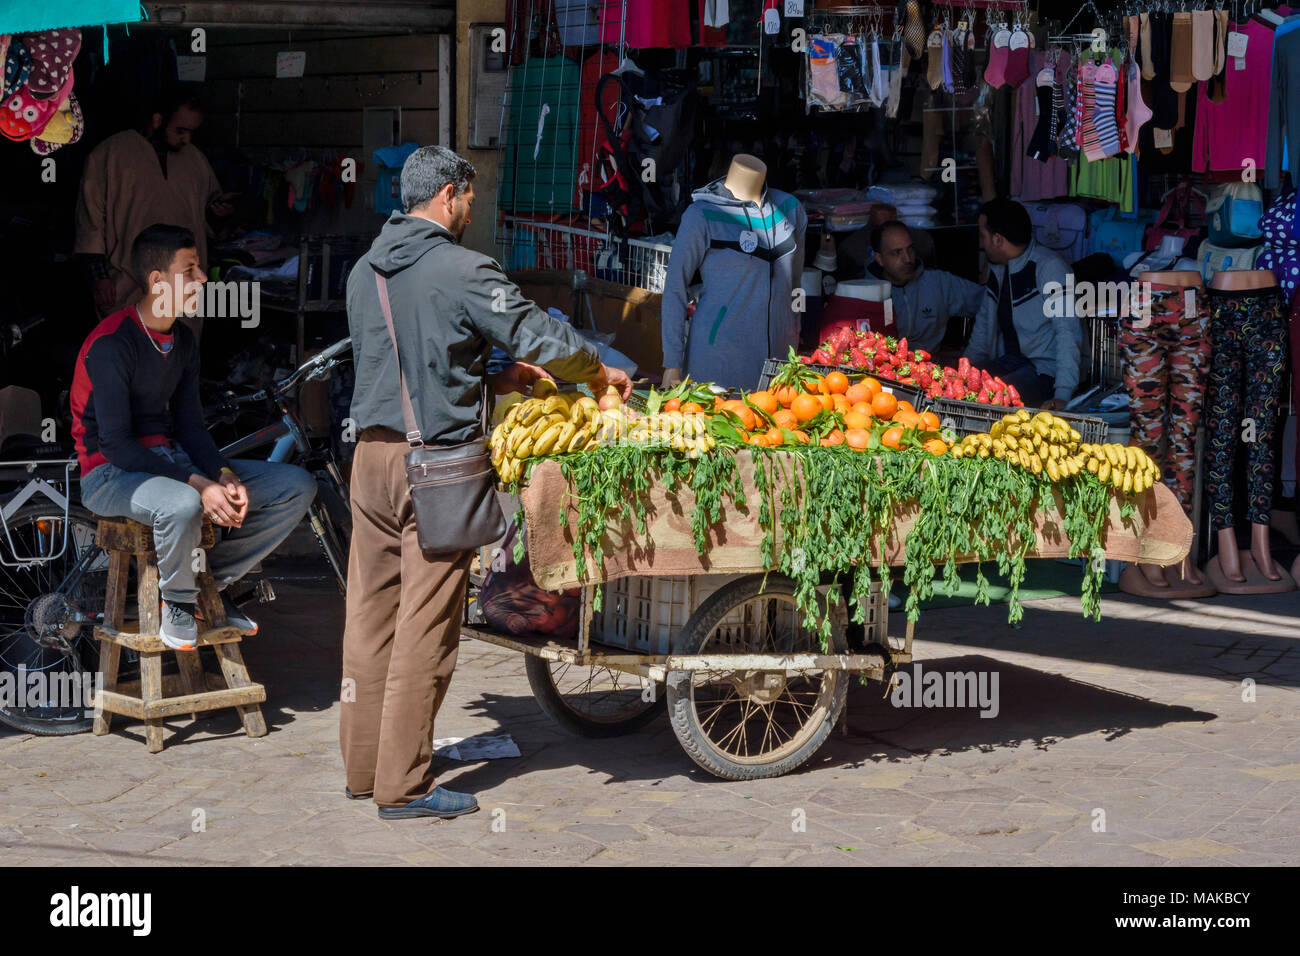 Il Marocco Marrakech Jemaa el Fna MEDINA SOUK fragole banane arance da un carrello per la vendita Foto Stock